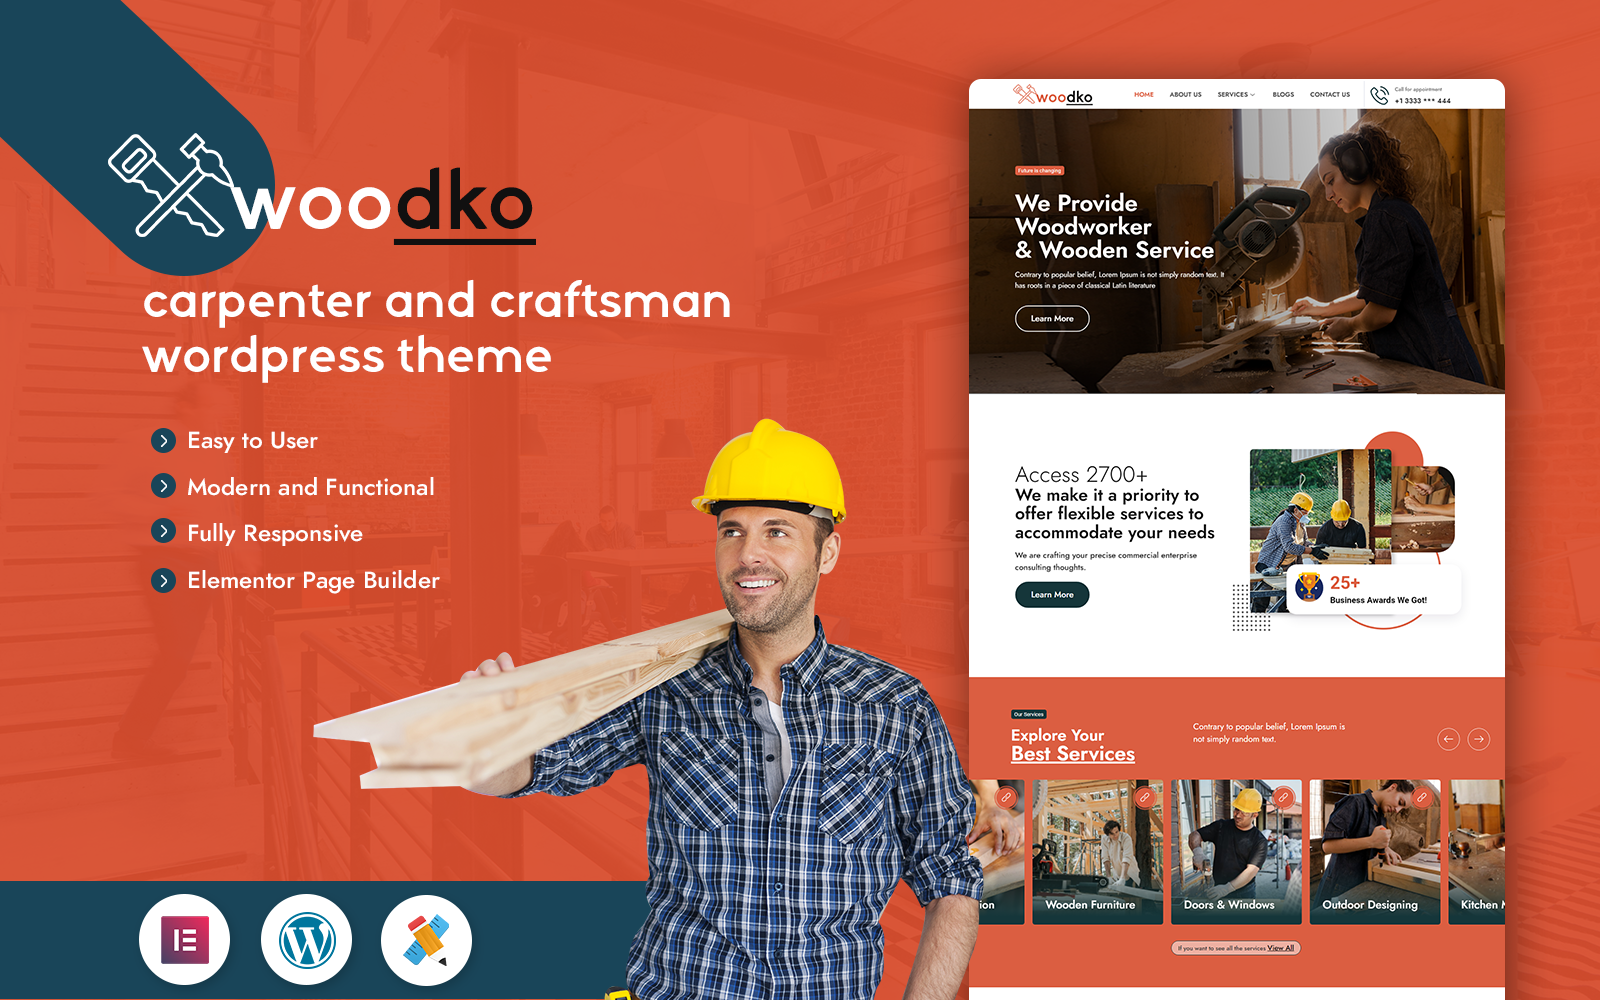 Woodko - Carpenter and Craftsman WordPress theme